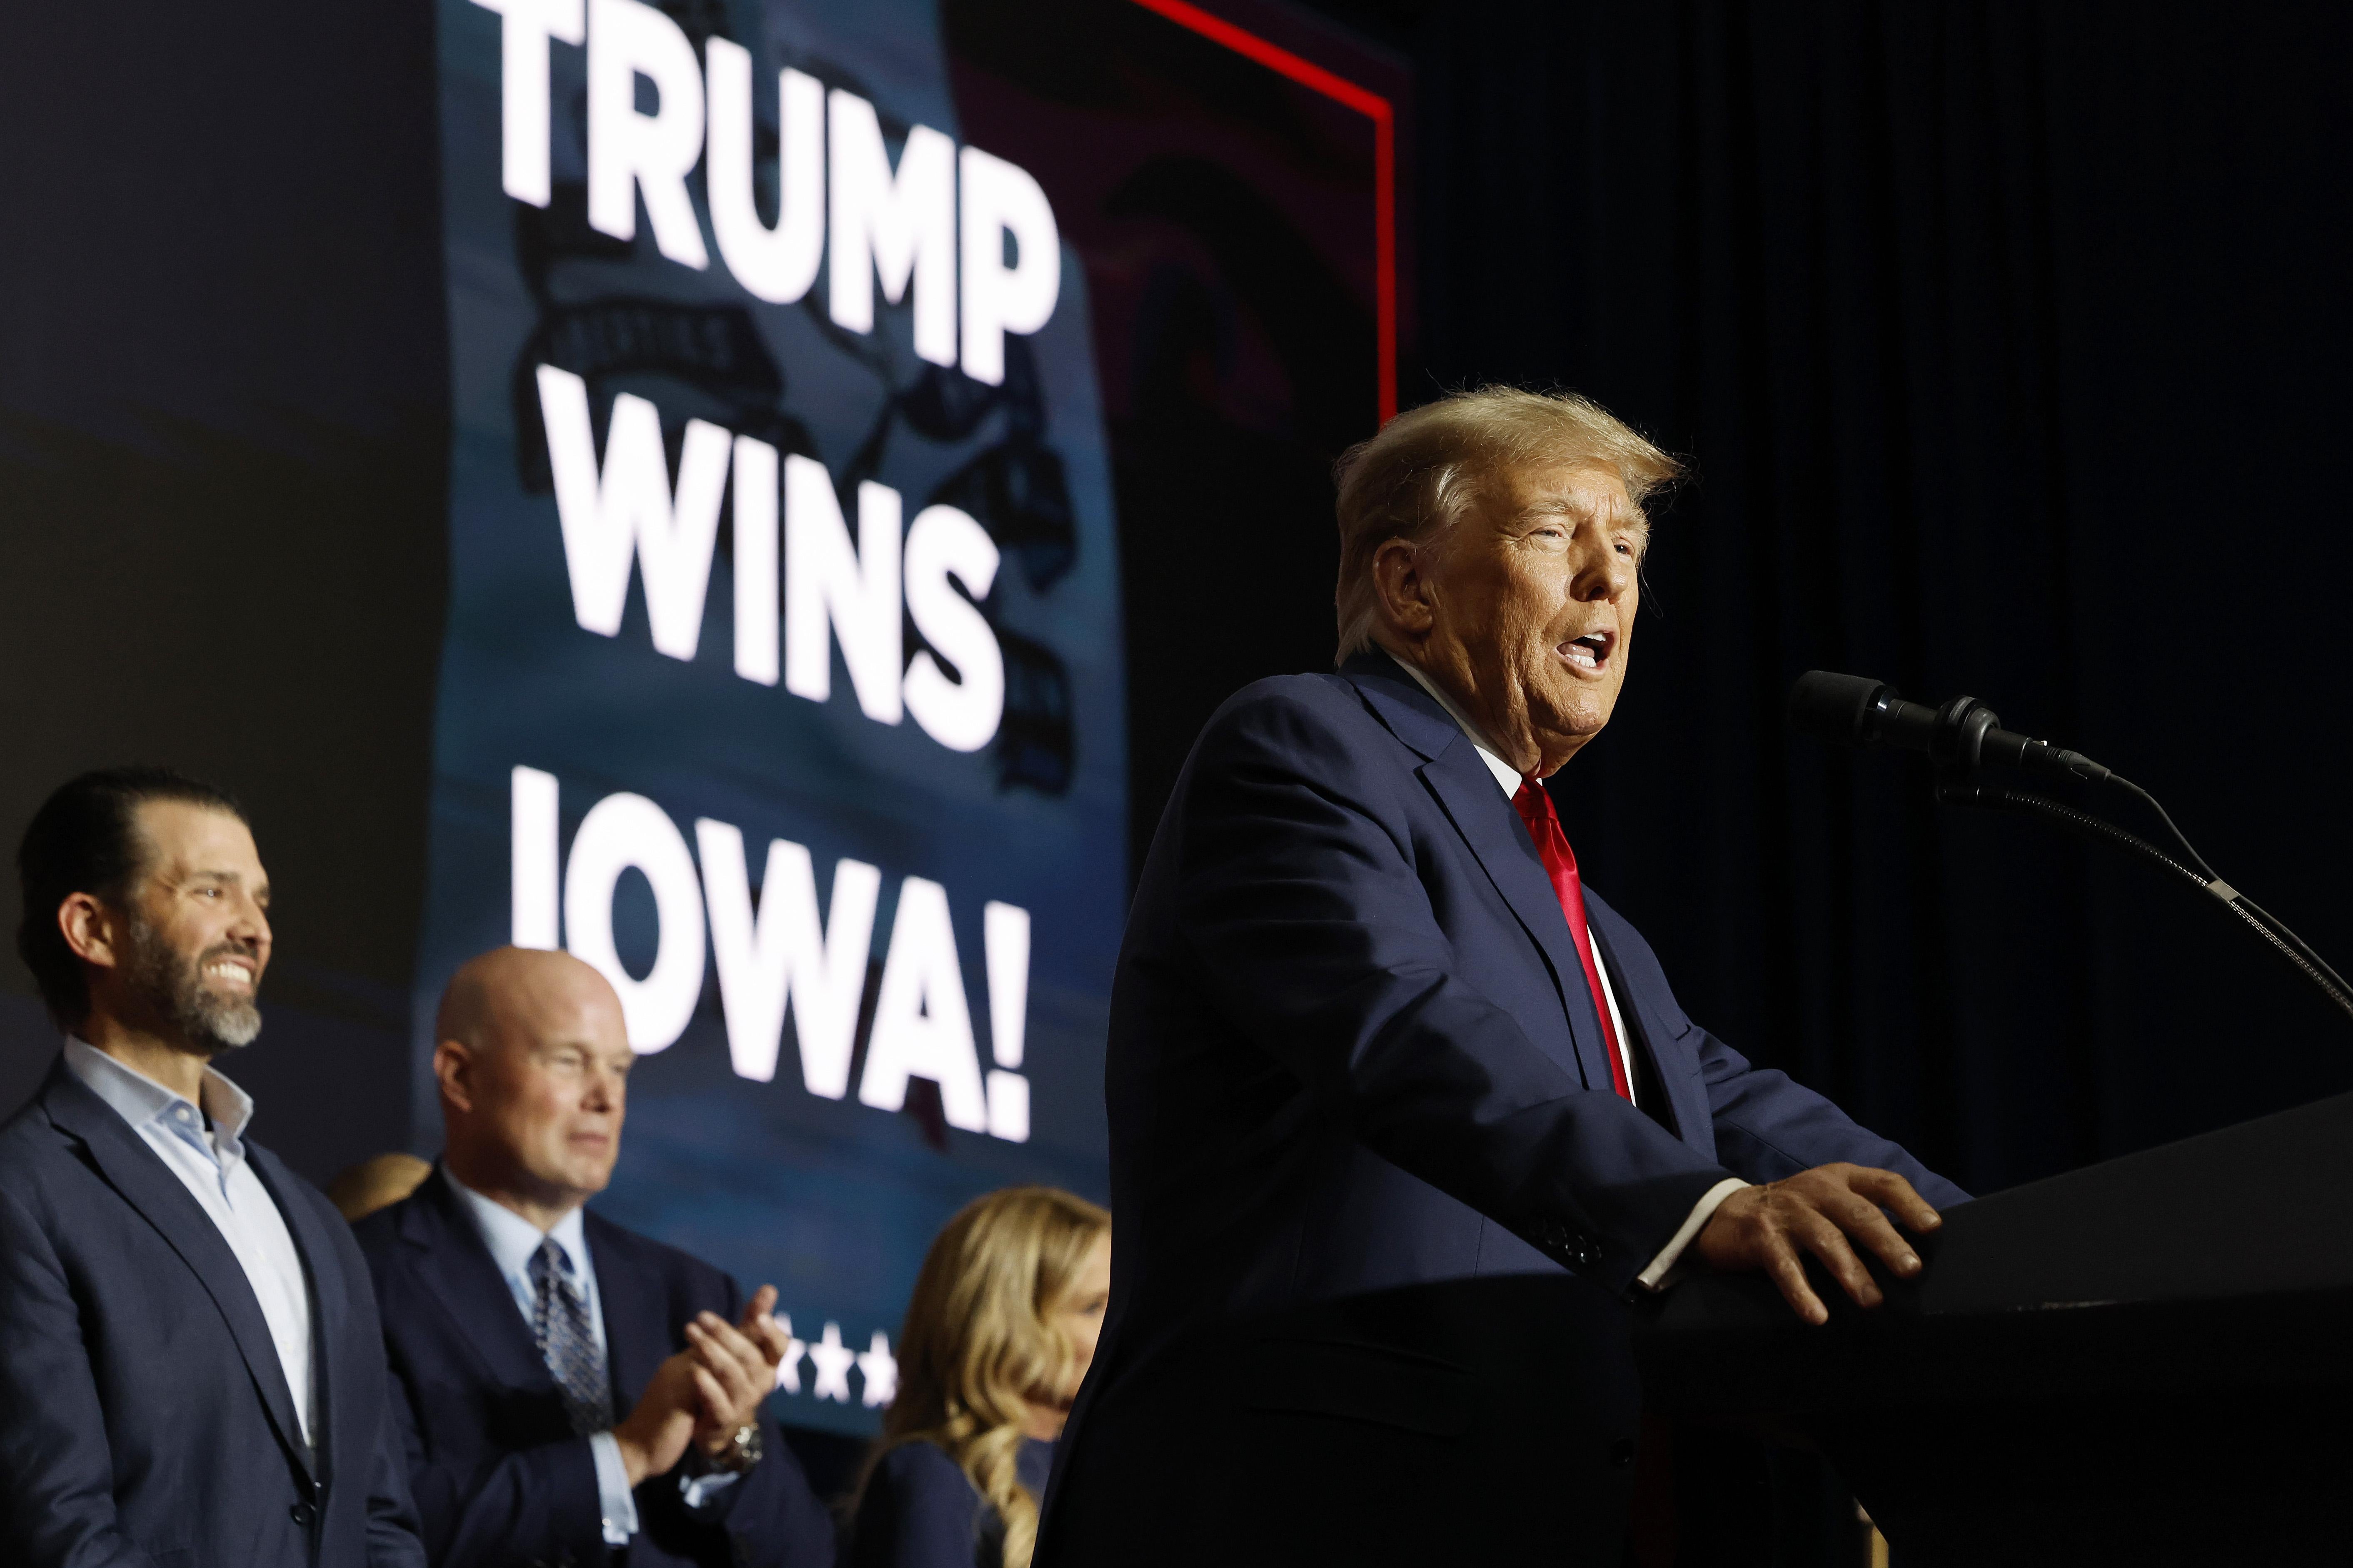 Donald Trump Won the Iowa Caucuses. Now What? David Plotz, Emily Bazelon, and John Dickerson